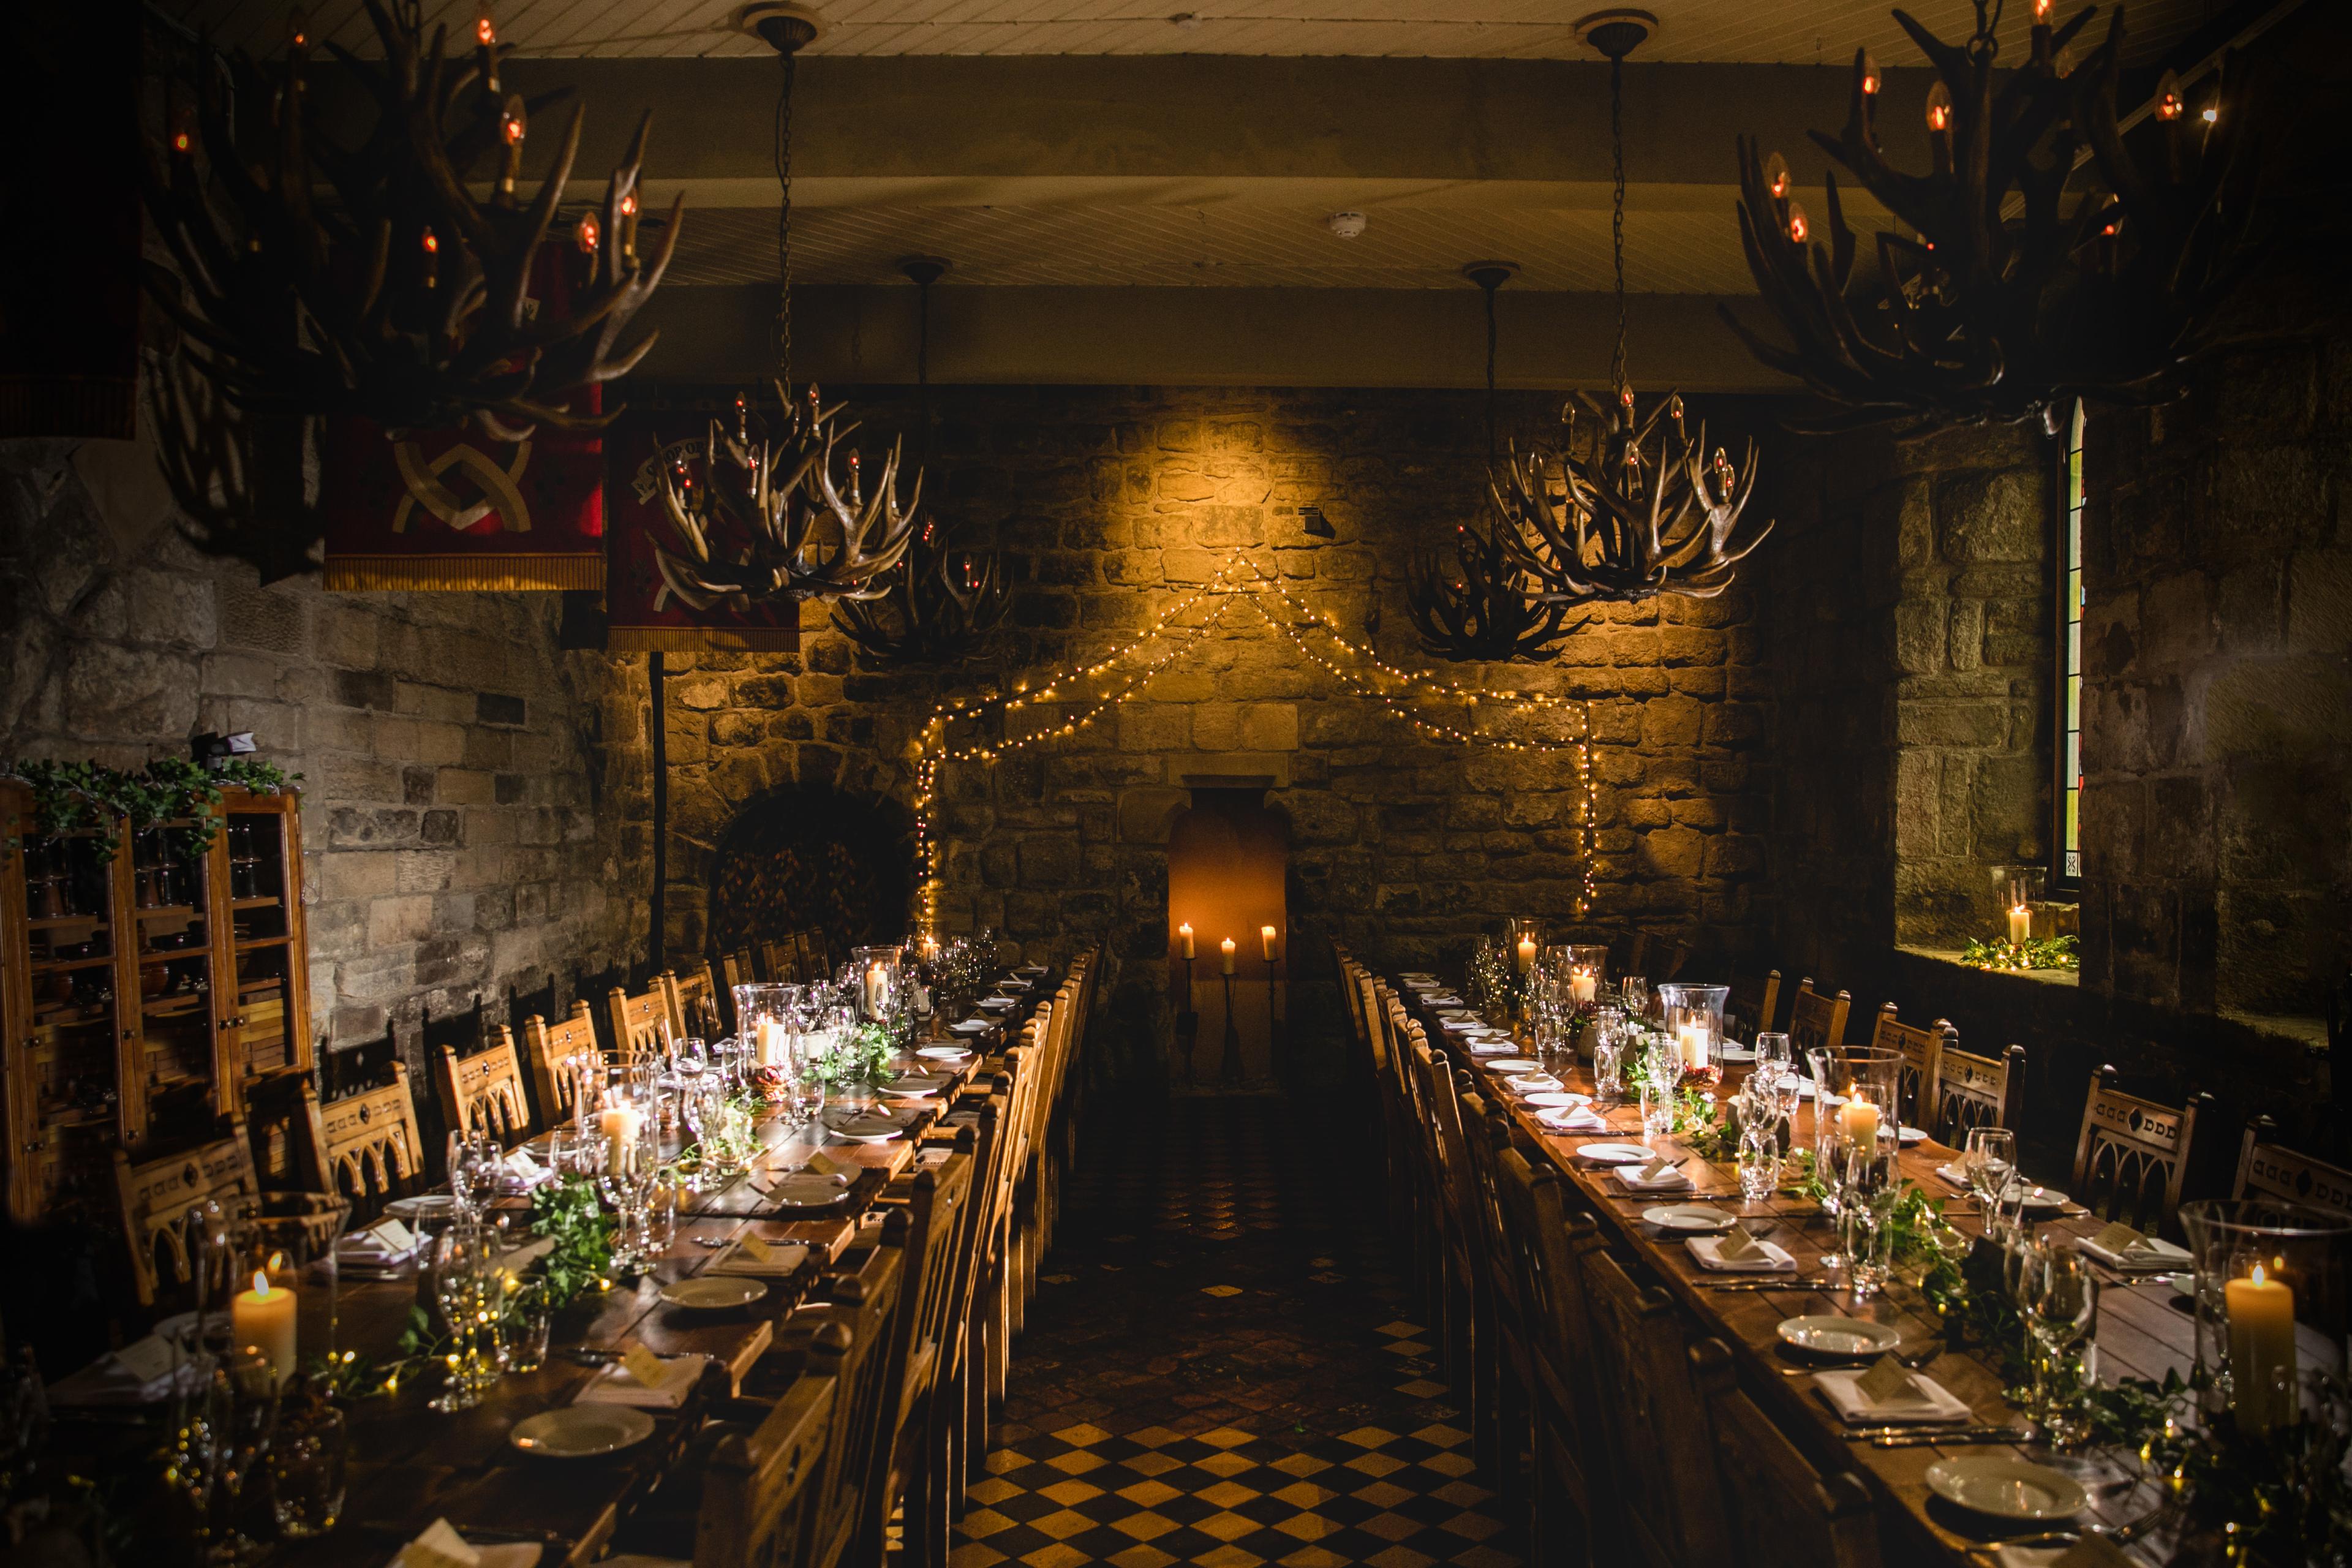 Medieval Banquet Hall, Blackfriars Restaurant photo #1